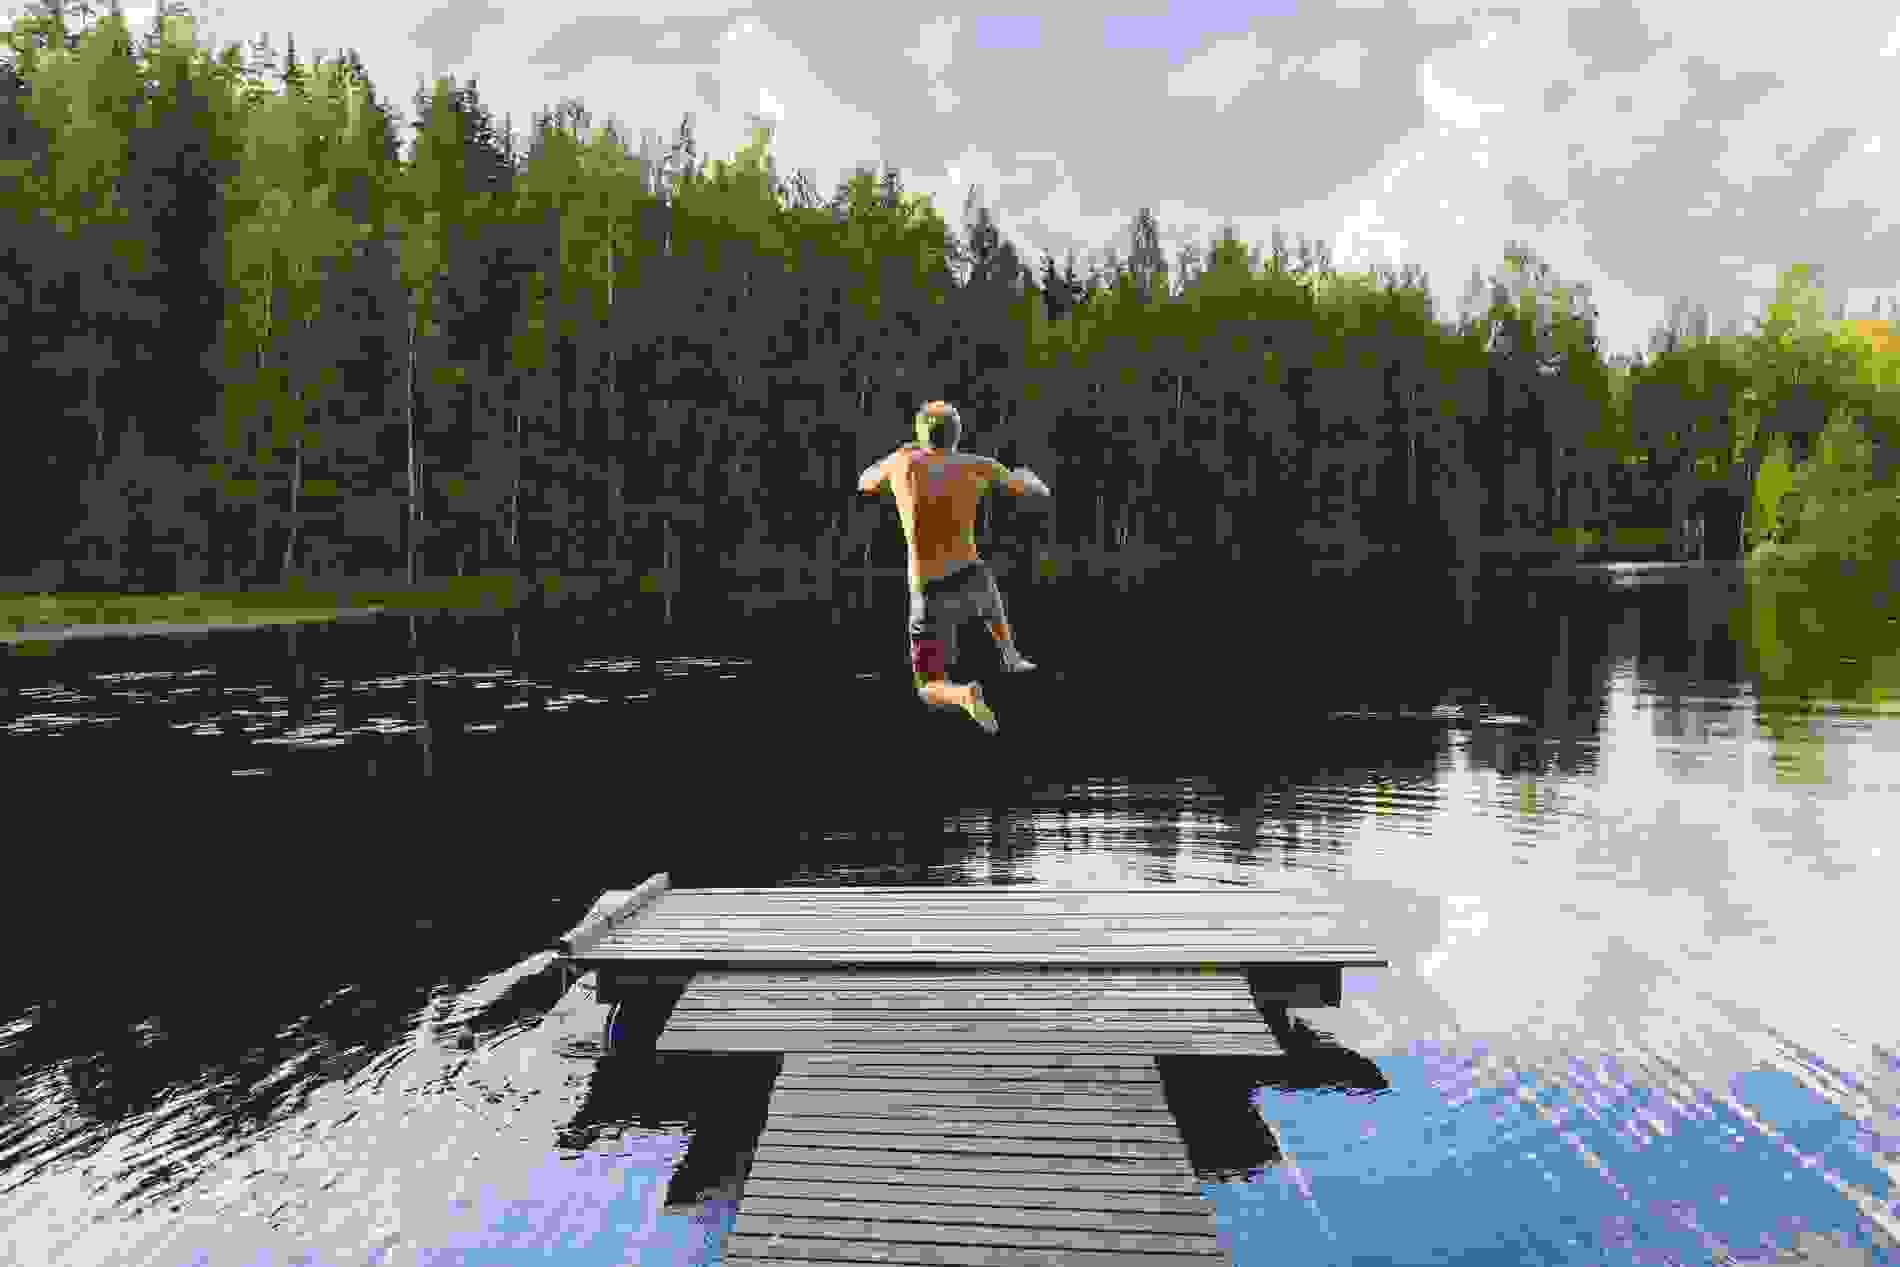 Man in shorts jumping into a lake